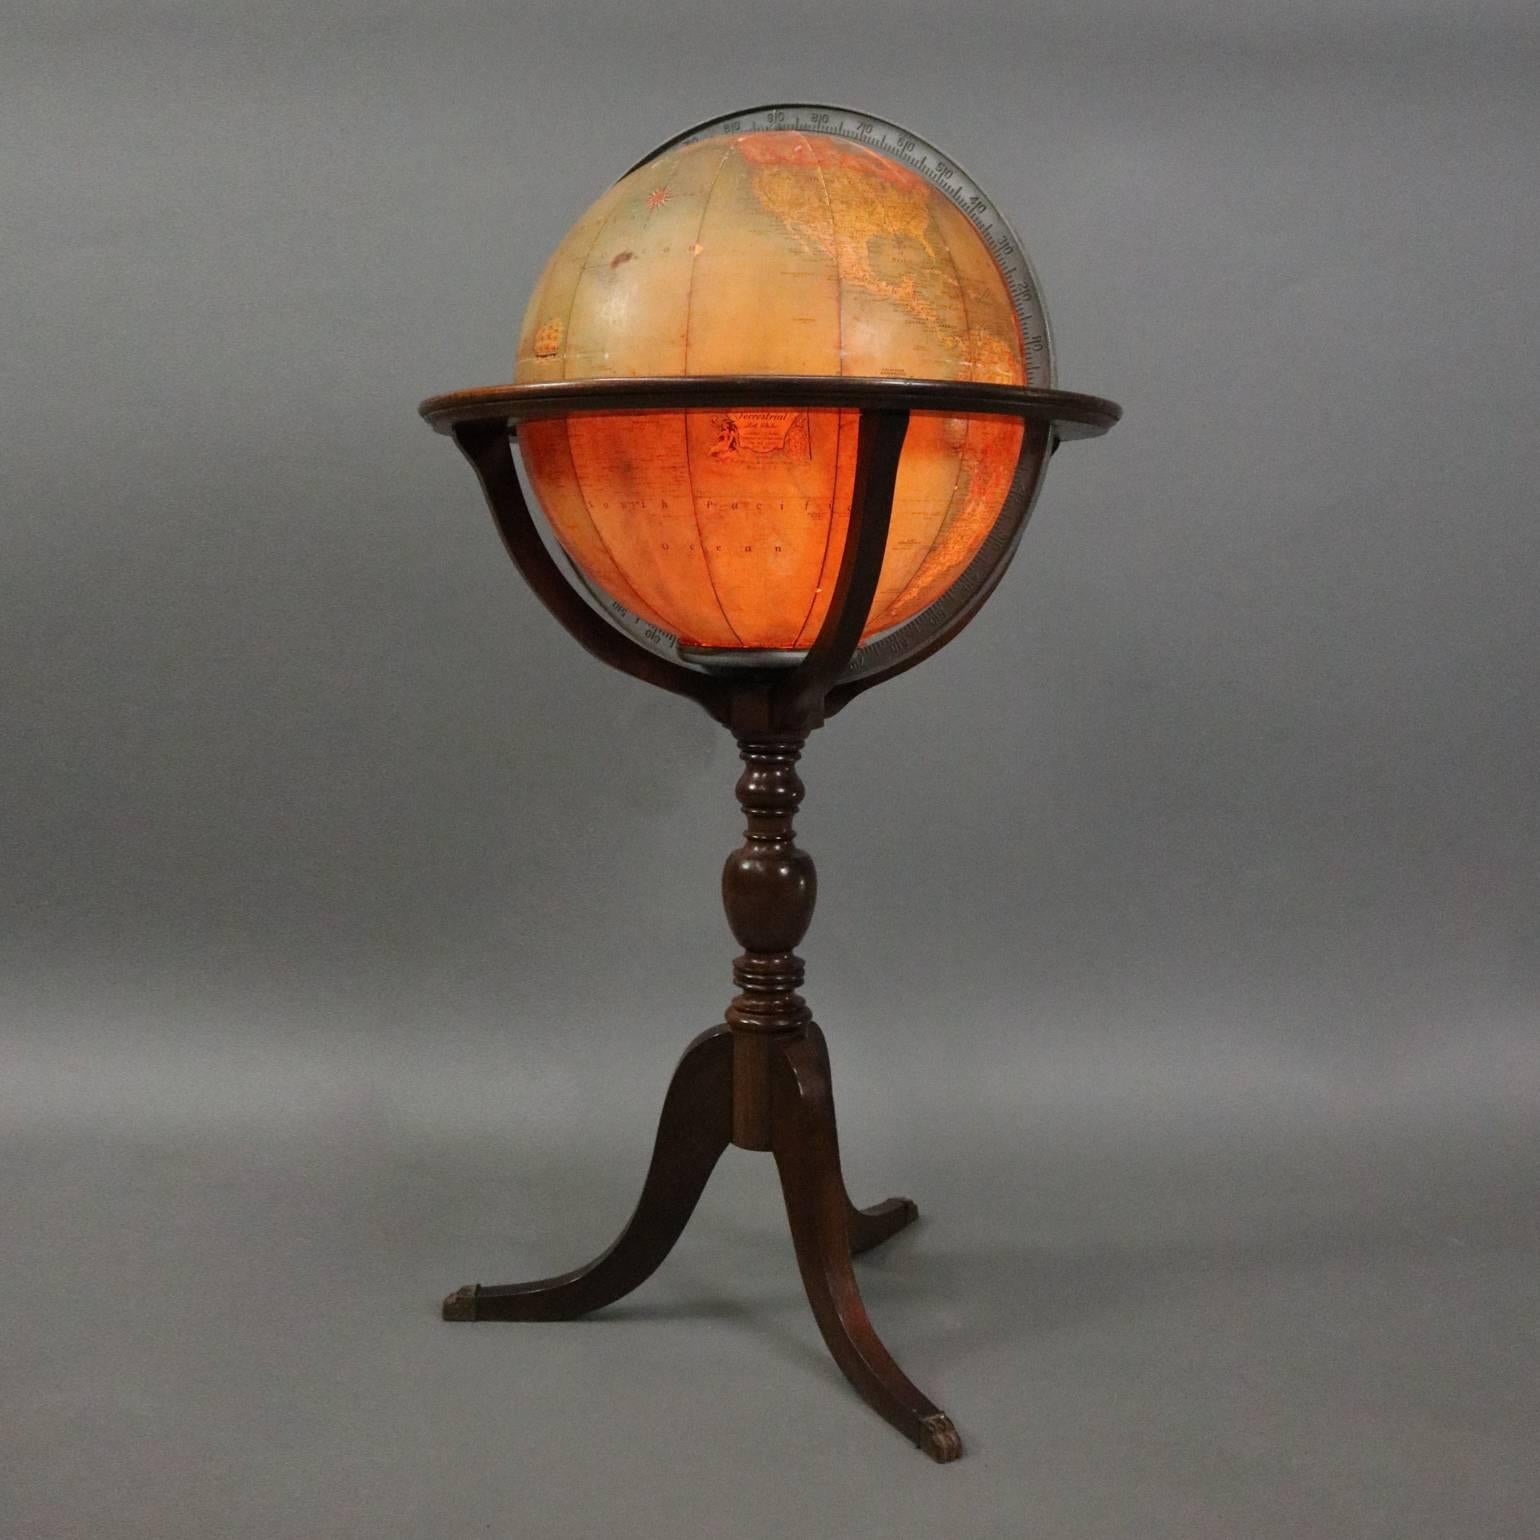 Vintage lighted library world globe on mahogany tripod floor stand, circa 1930.

Measures: 40" H x 20" diam.